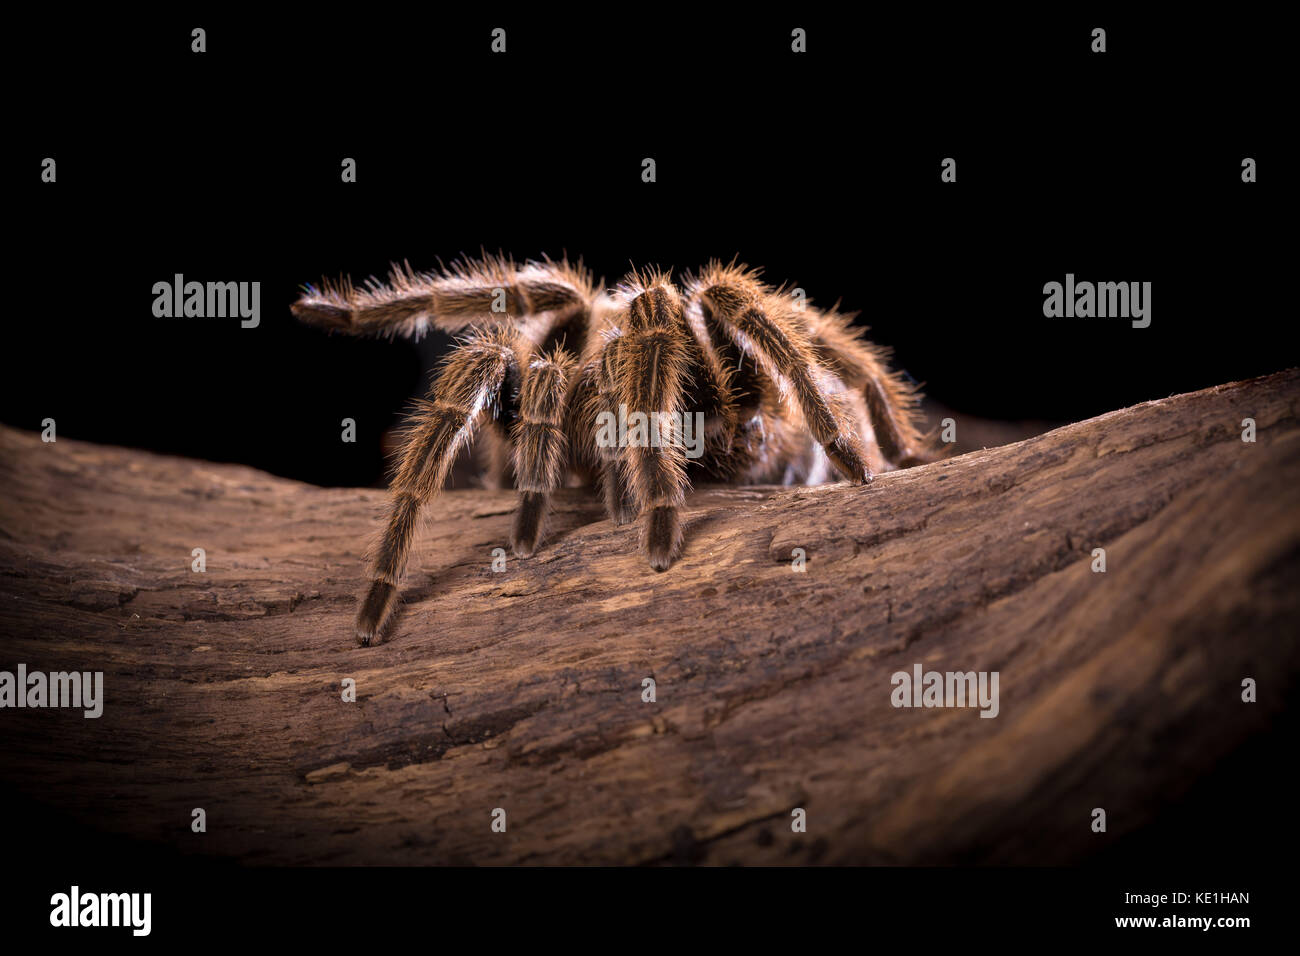 Rosa chilena tarantula araña grande retroiluminada con mucho detalle peludas Foto de stock